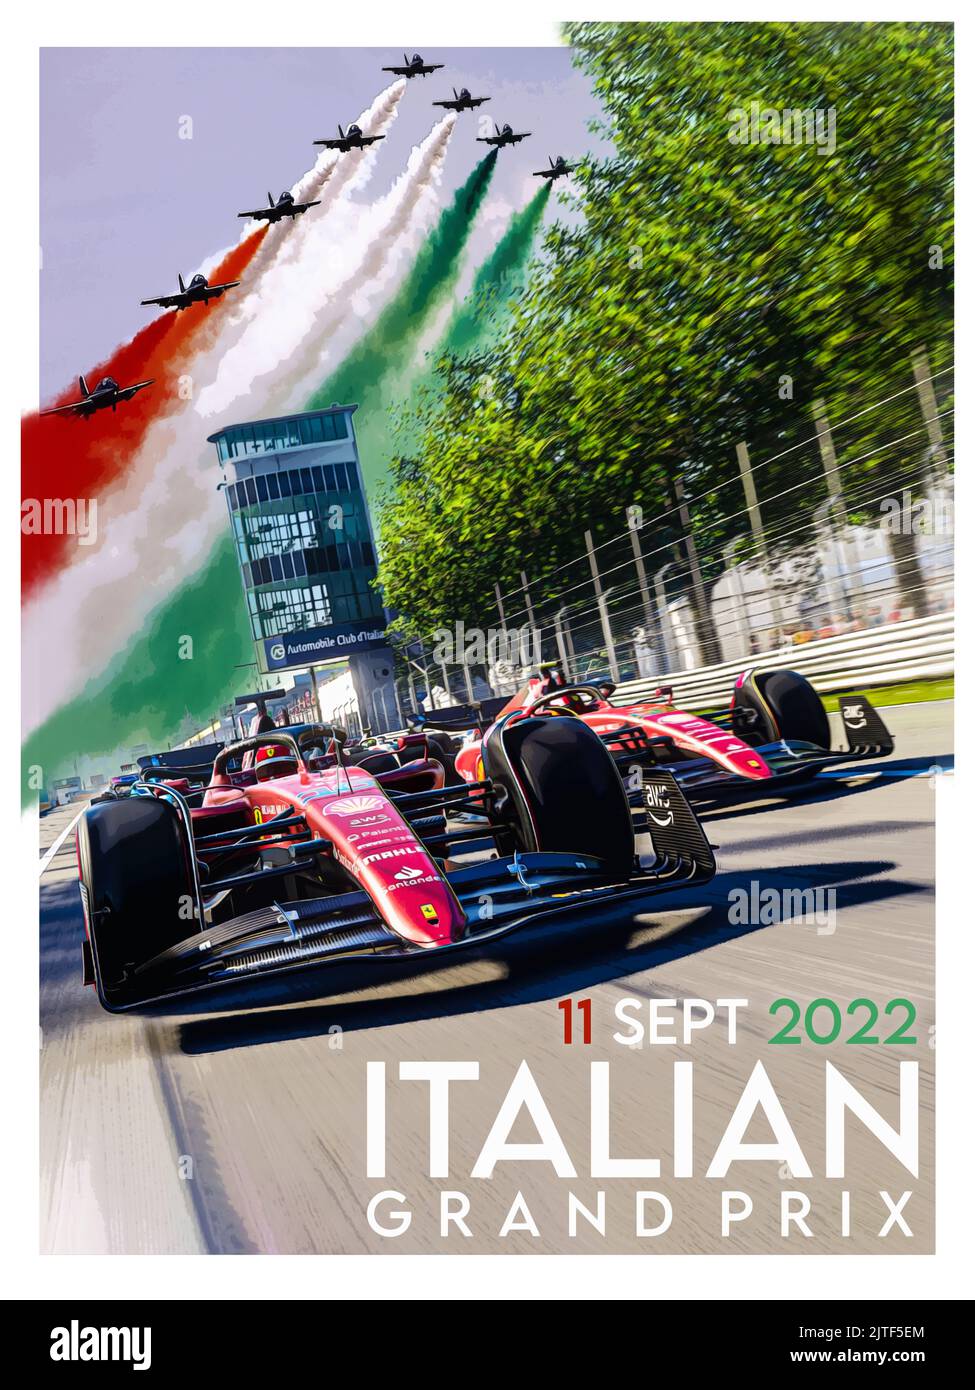 Italian F1 Grand Prix 2022 Race Poster Stock Photo